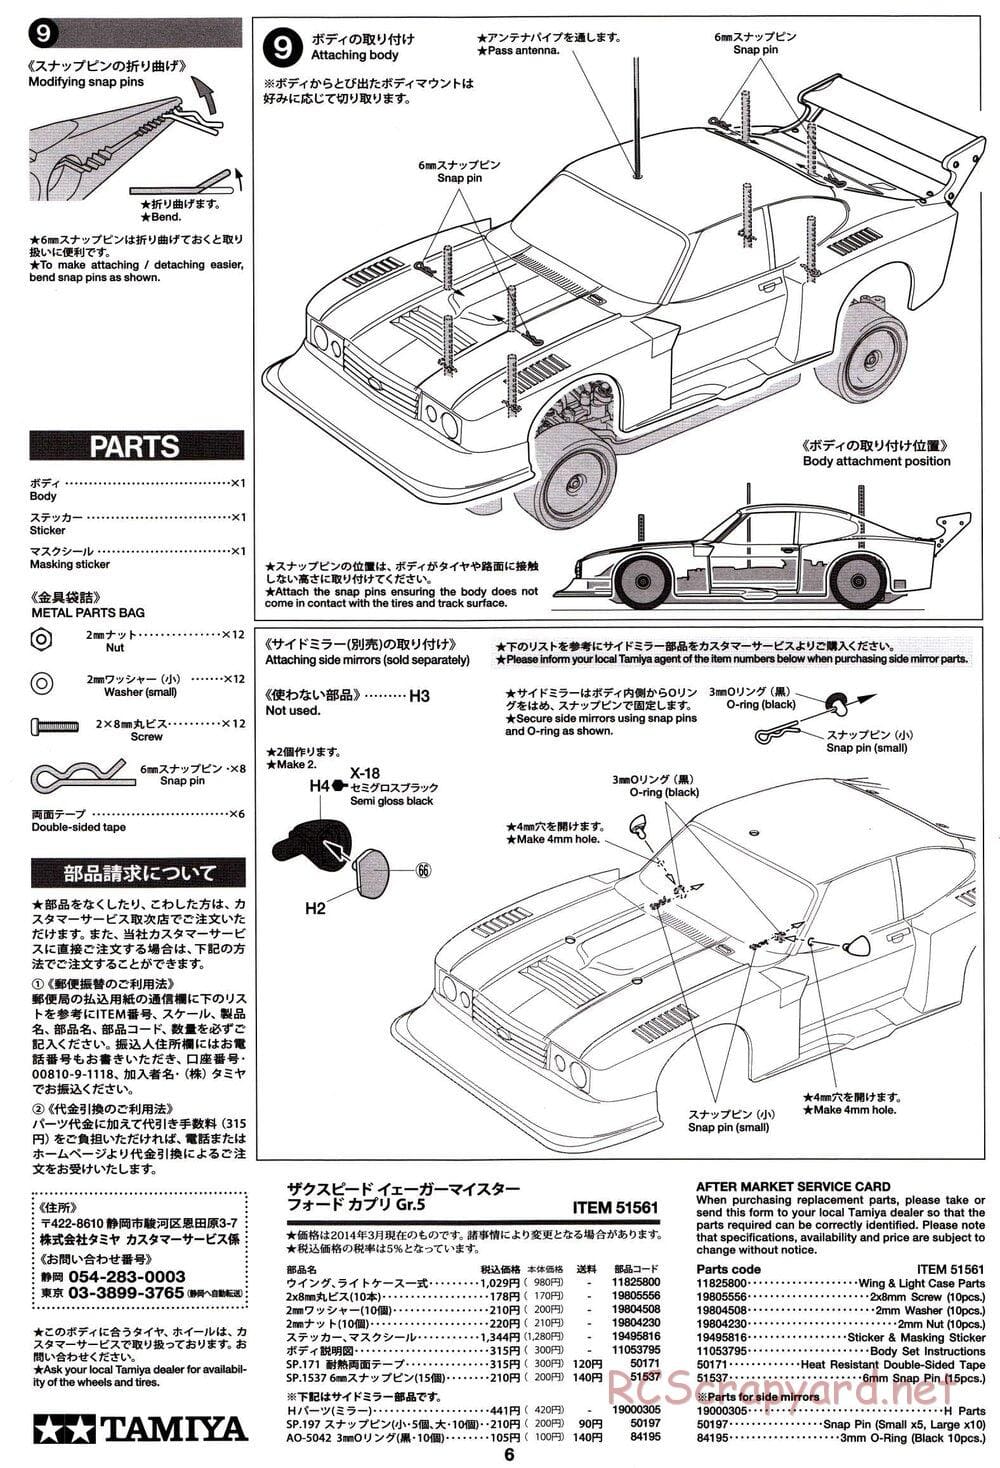 Tamiya - Zakspeed Jgermeister Ford Capri Turbo Gr.5 - TT-02 Chassis - Body Manual - Page 6